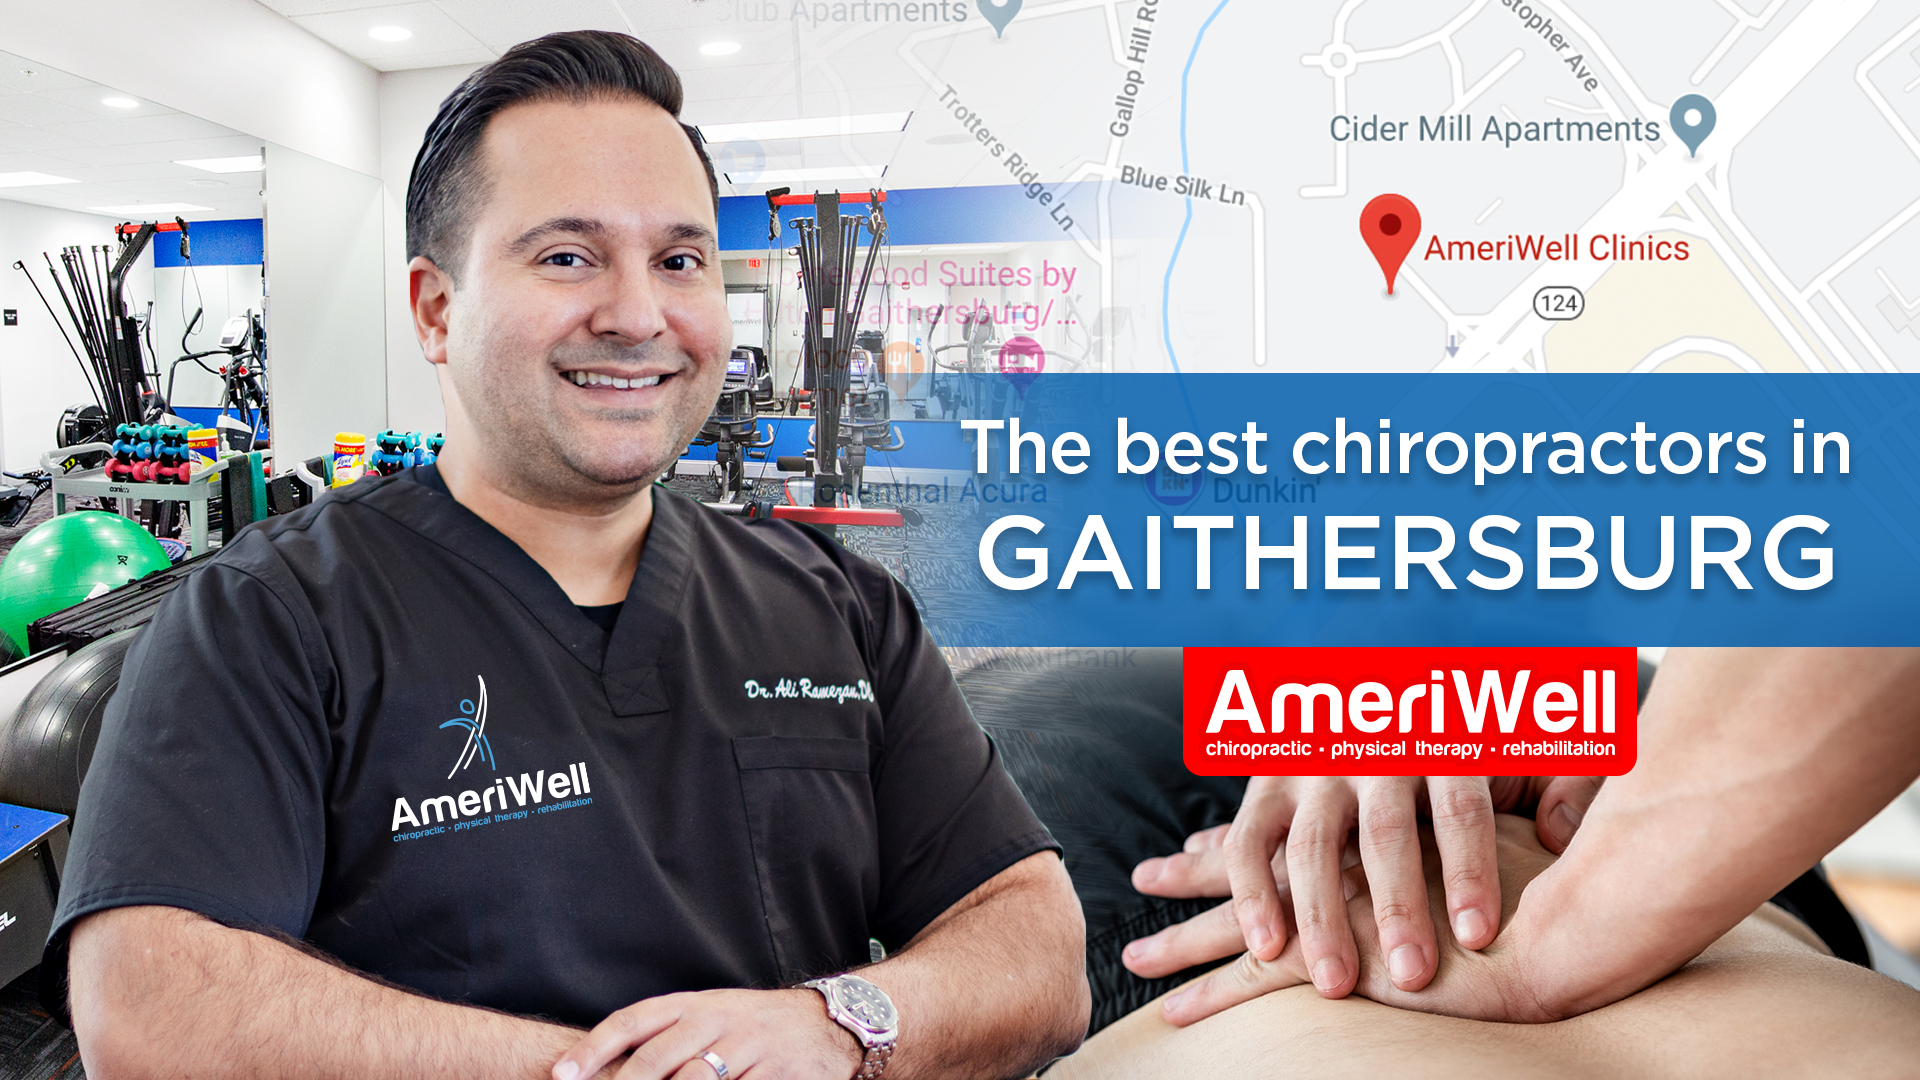 Gaithersburg – Ameriwell Clinics the best chiropractors